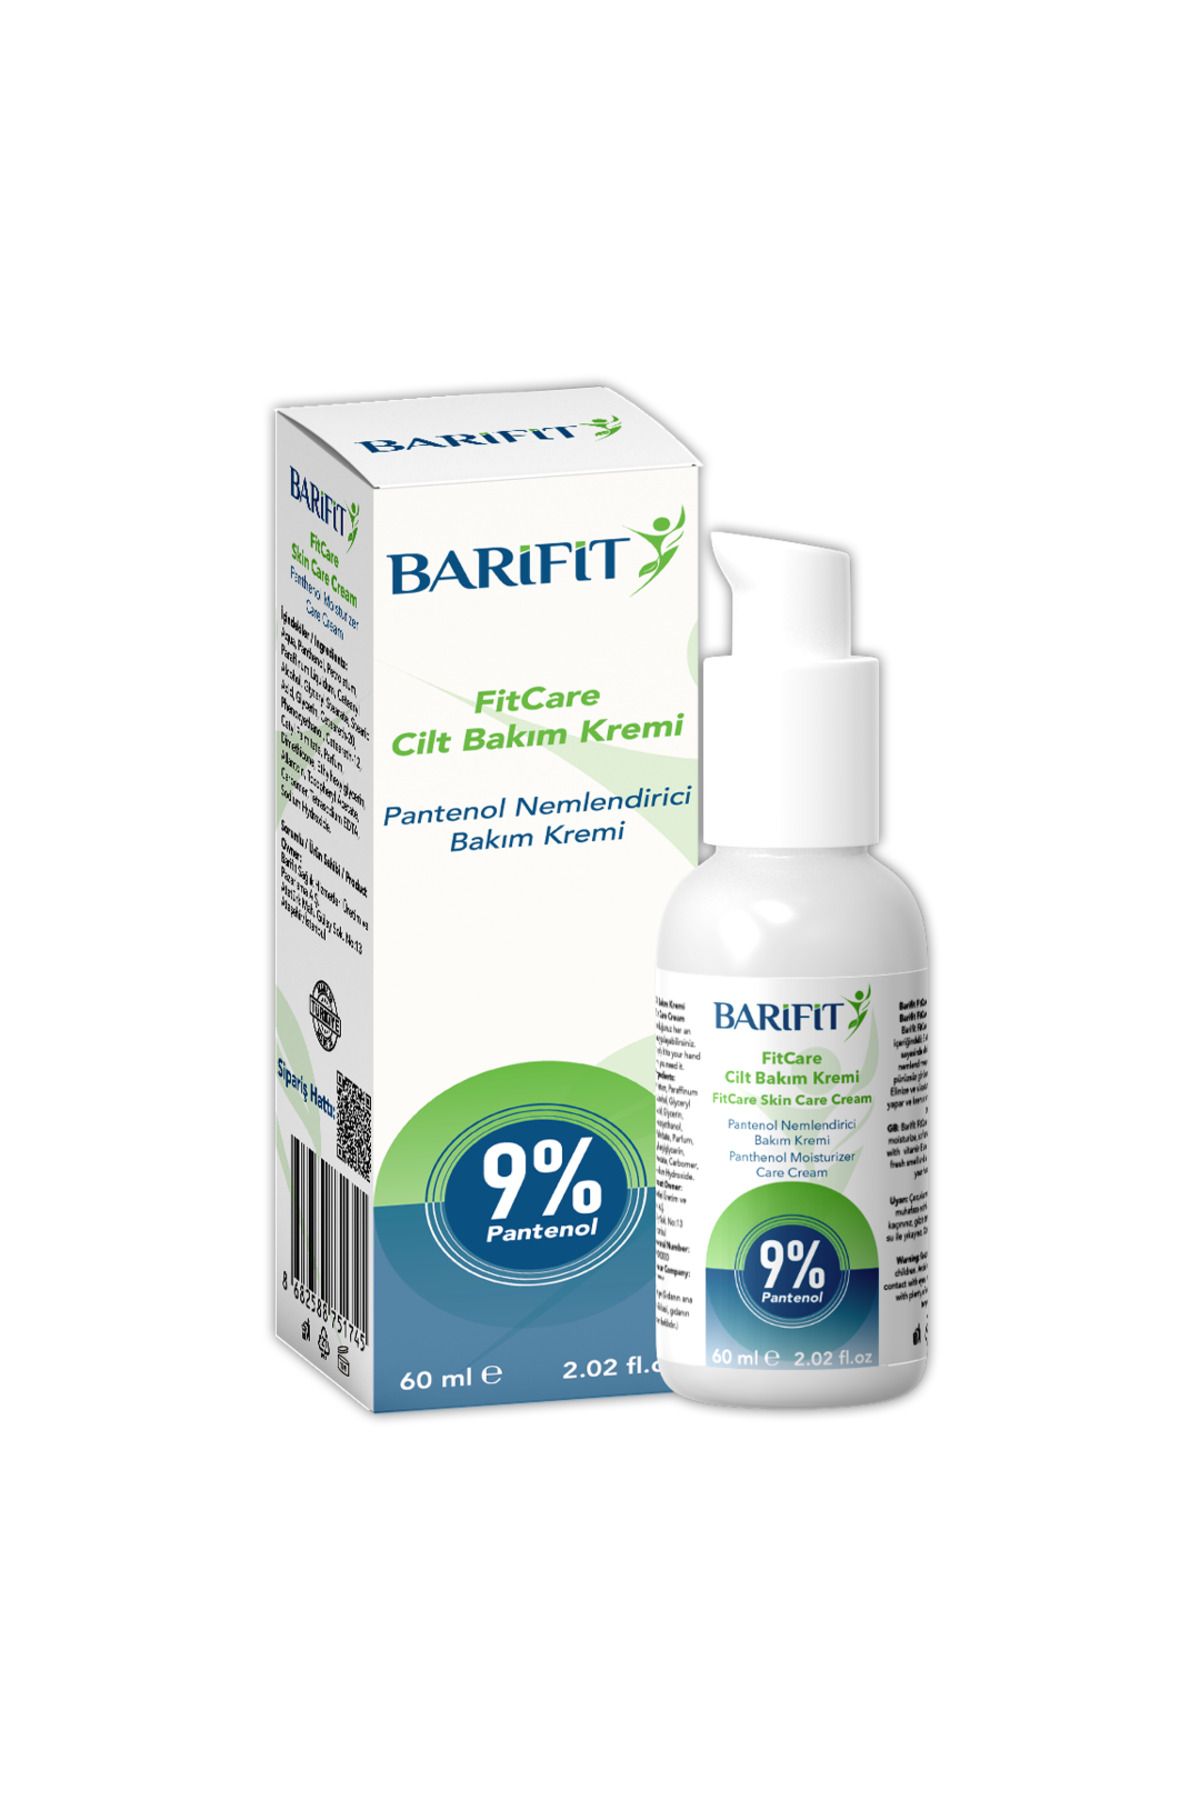 Barifit BARİFİT FİT CARE CİLT BAKIM KREMİ %9 PANTHENOL